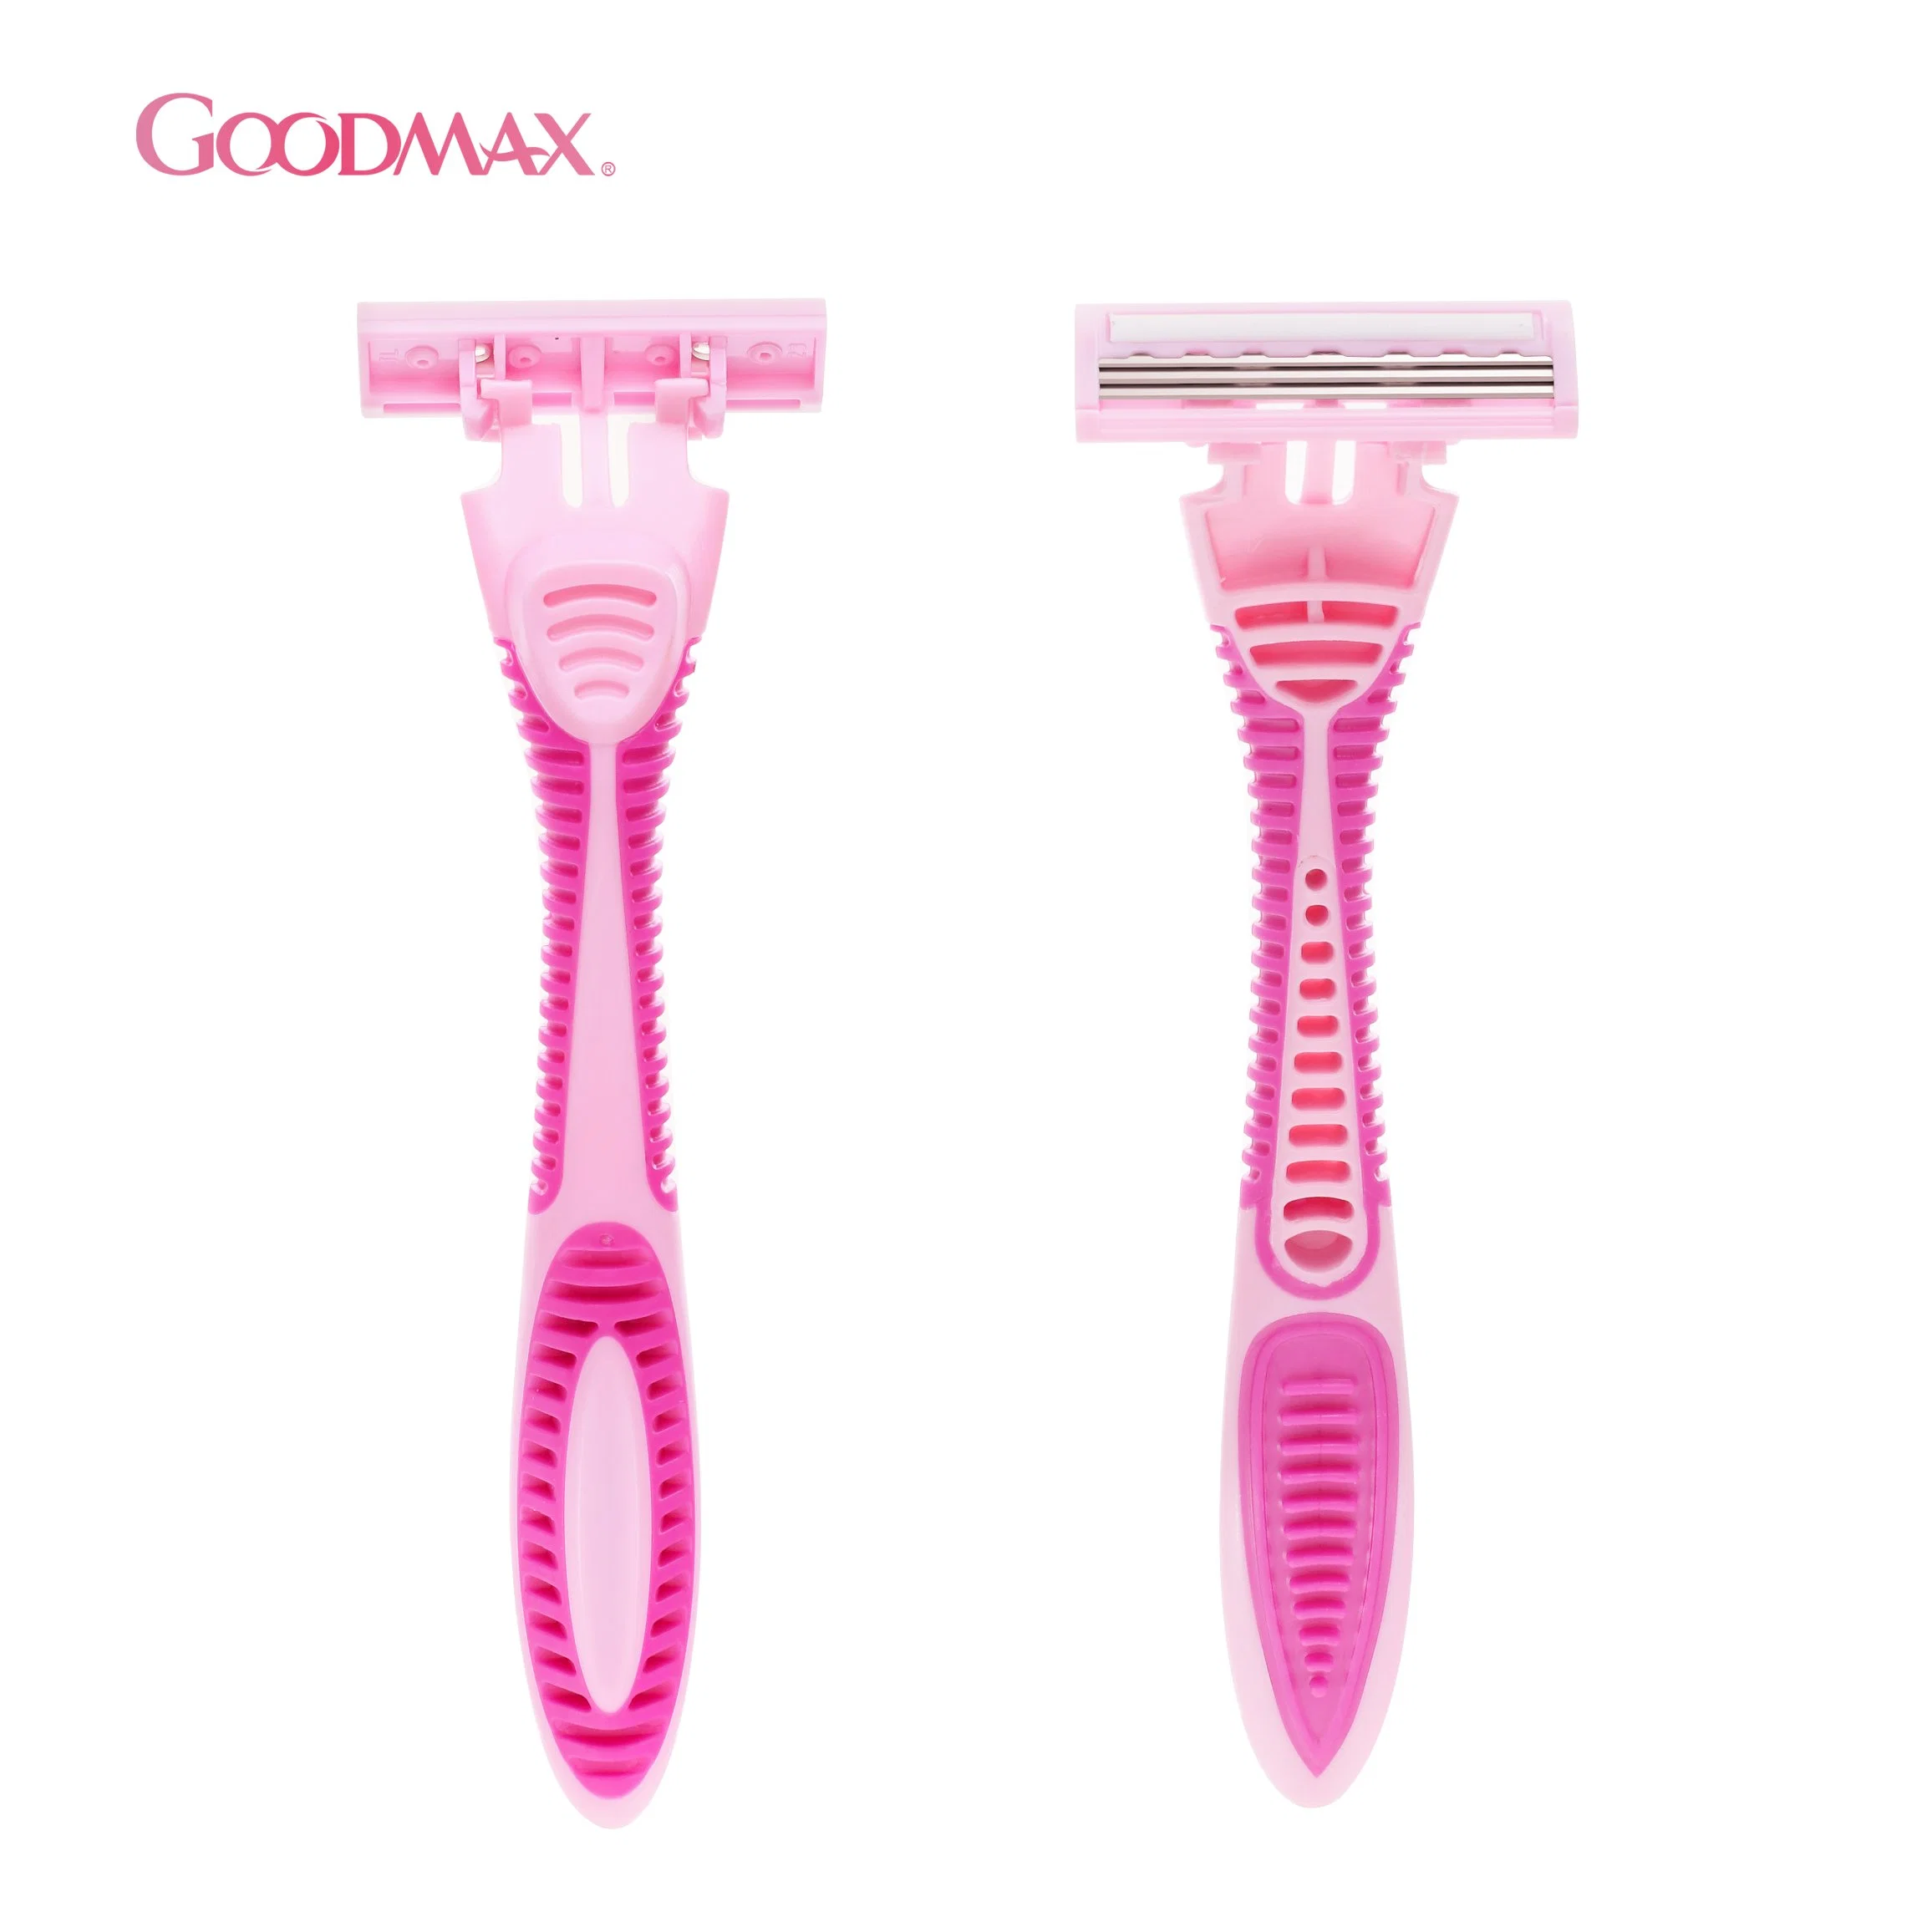 Triple Blade Great Shape Disposable Shaving Razor for Women (Goodmax)